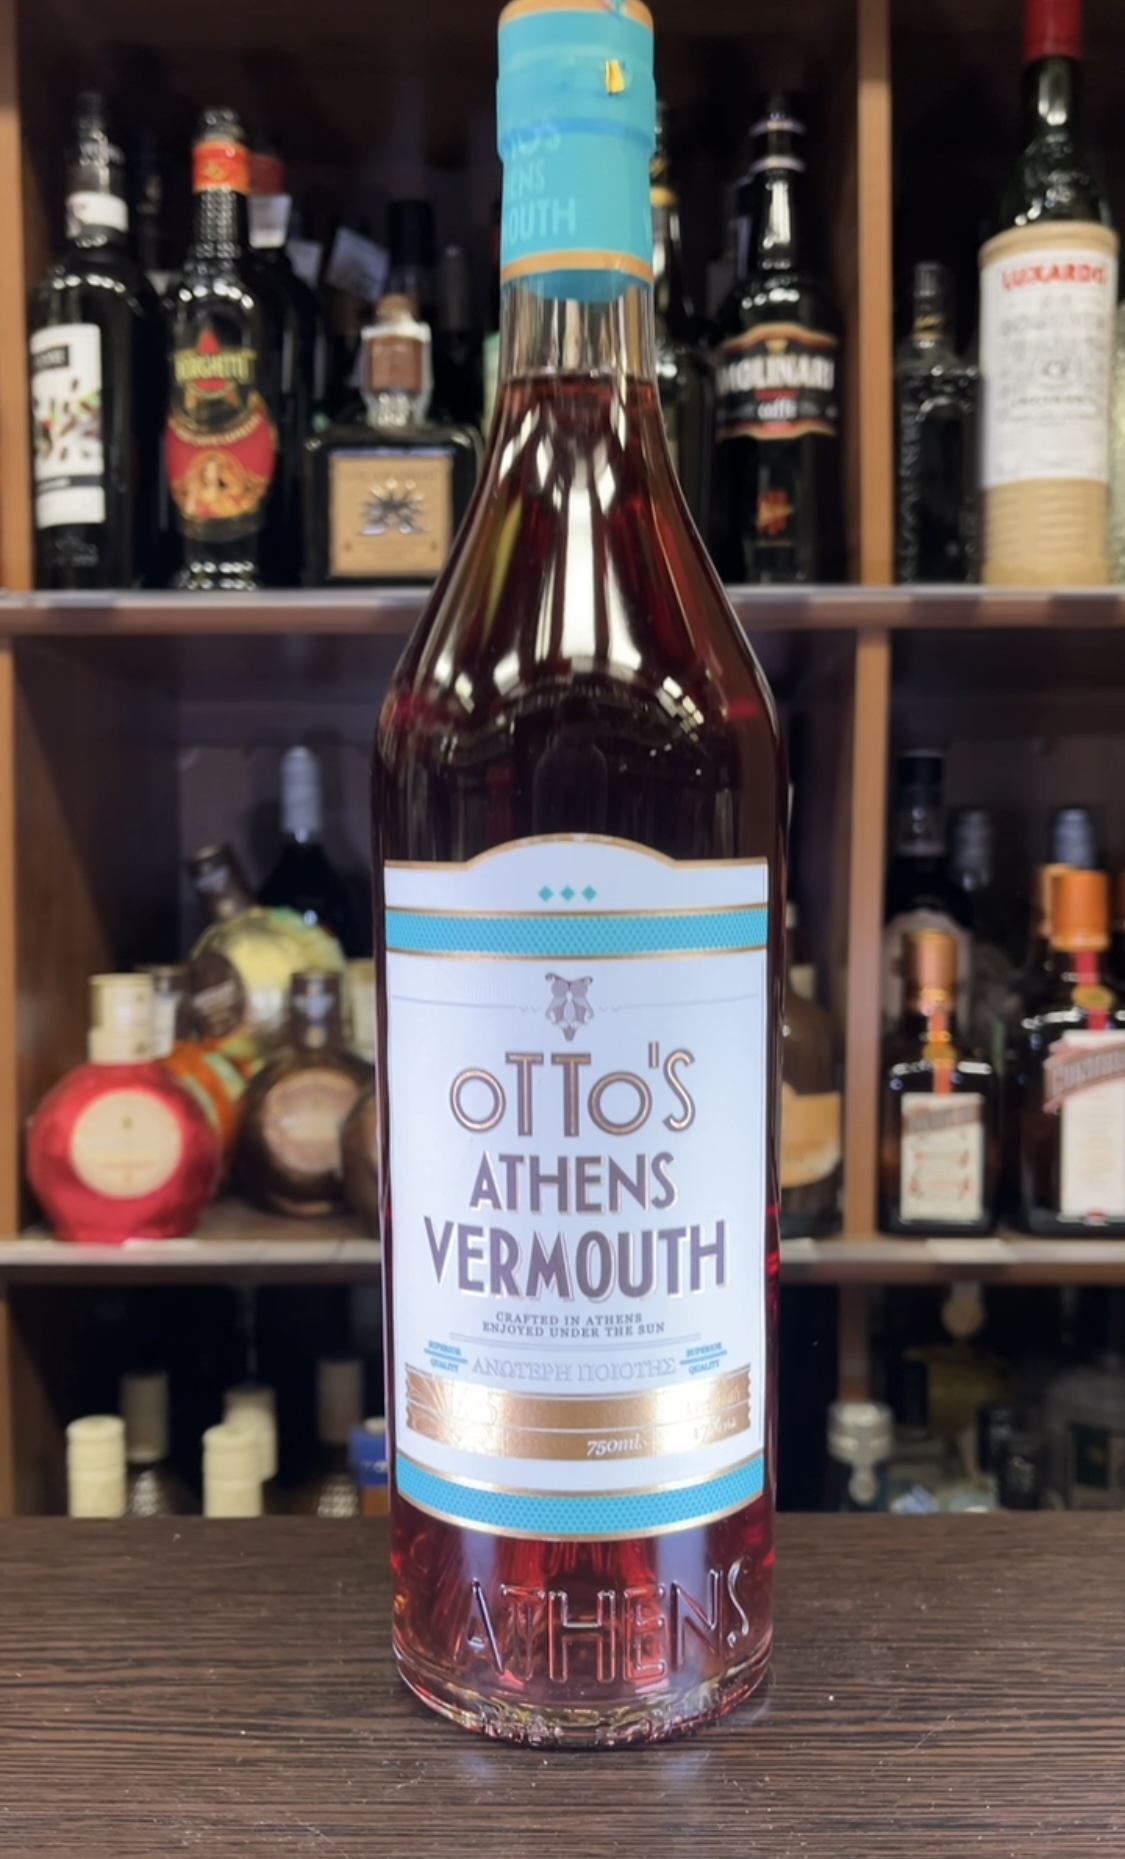 Vermouth Ottos Вермут Отто с Афинский 0.75л